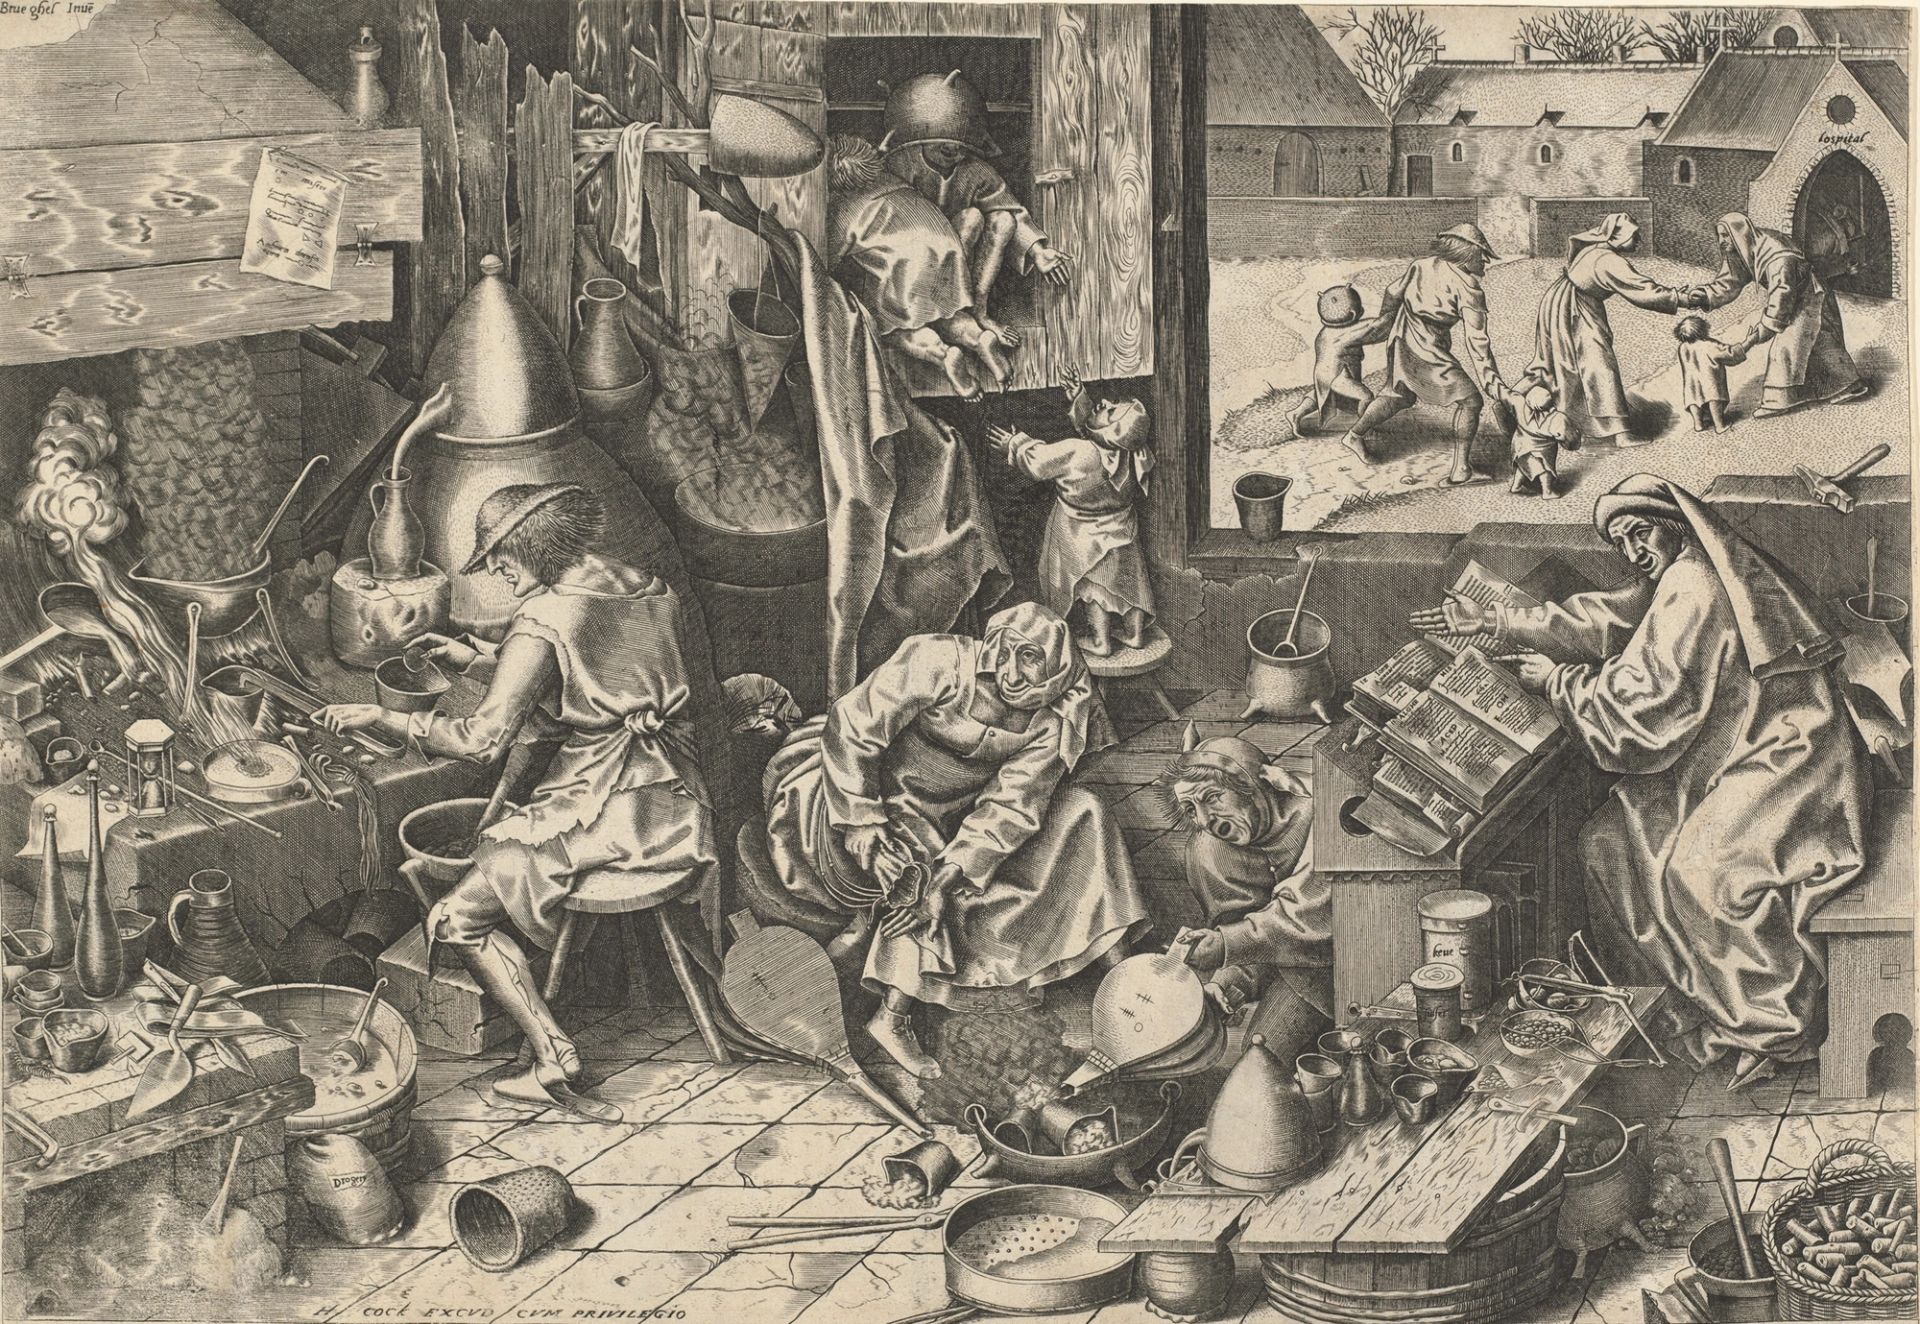 Invite: Pieter Brueghel the Elder, The Alchemist, after 1558, engraved by Philipp Galle